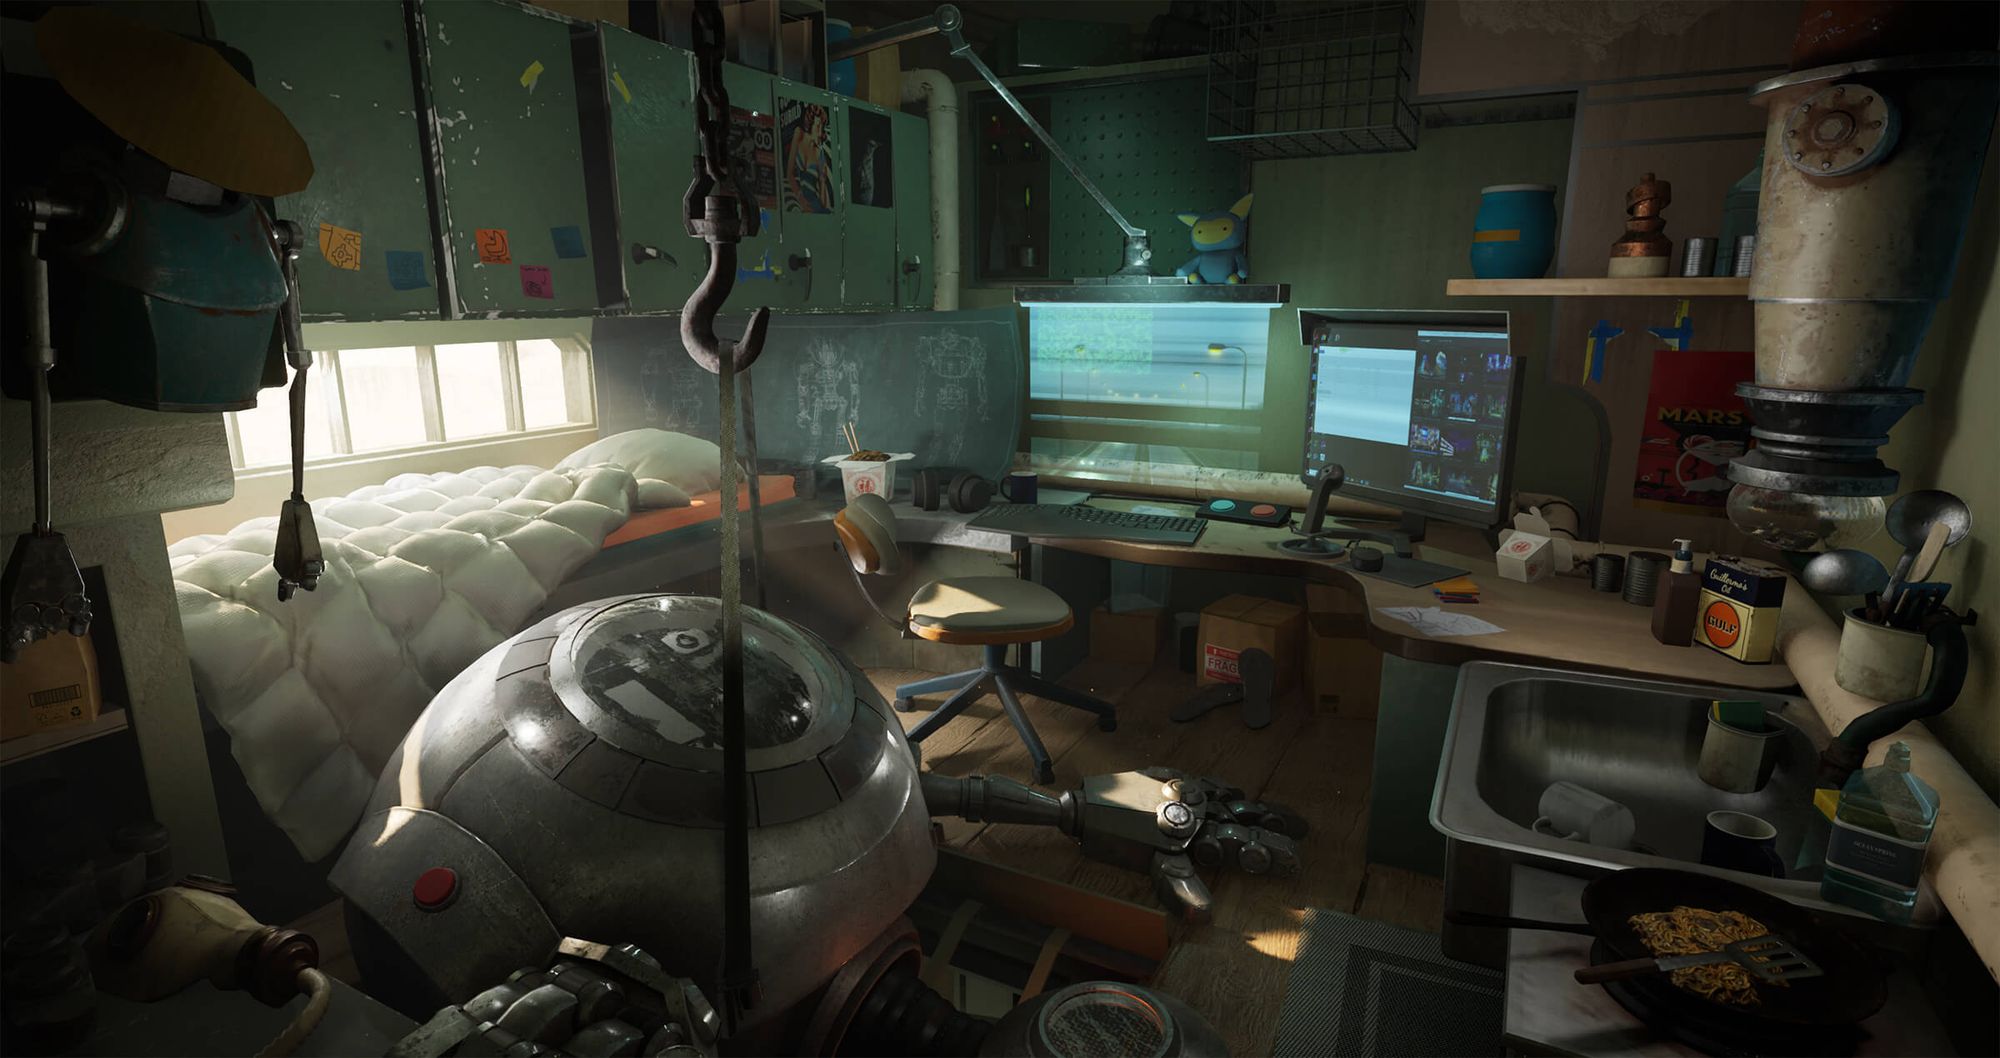 Engineer's Bedroom: Creating an Immersive Interior in Unreal Engine 5